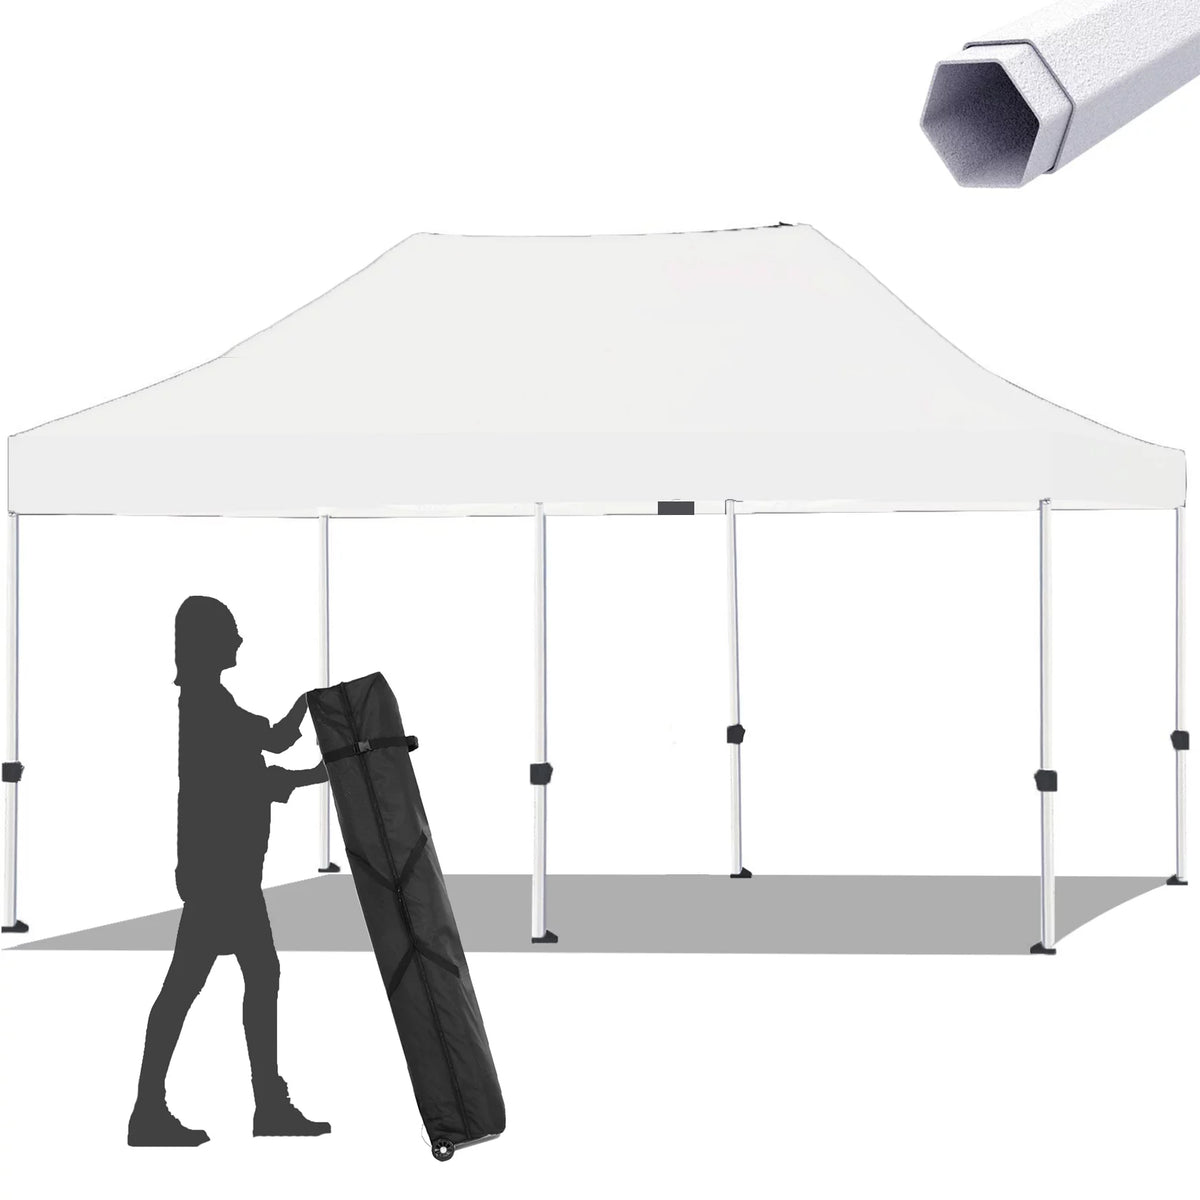 YUEBO Heavy Duty Ez Pop up Canopy Tent 10'x20' Ez Pop Up Canopy Tent Commercial Instant Canopies with Sidewalls, Bonus 4 Sand Weights Bags - White